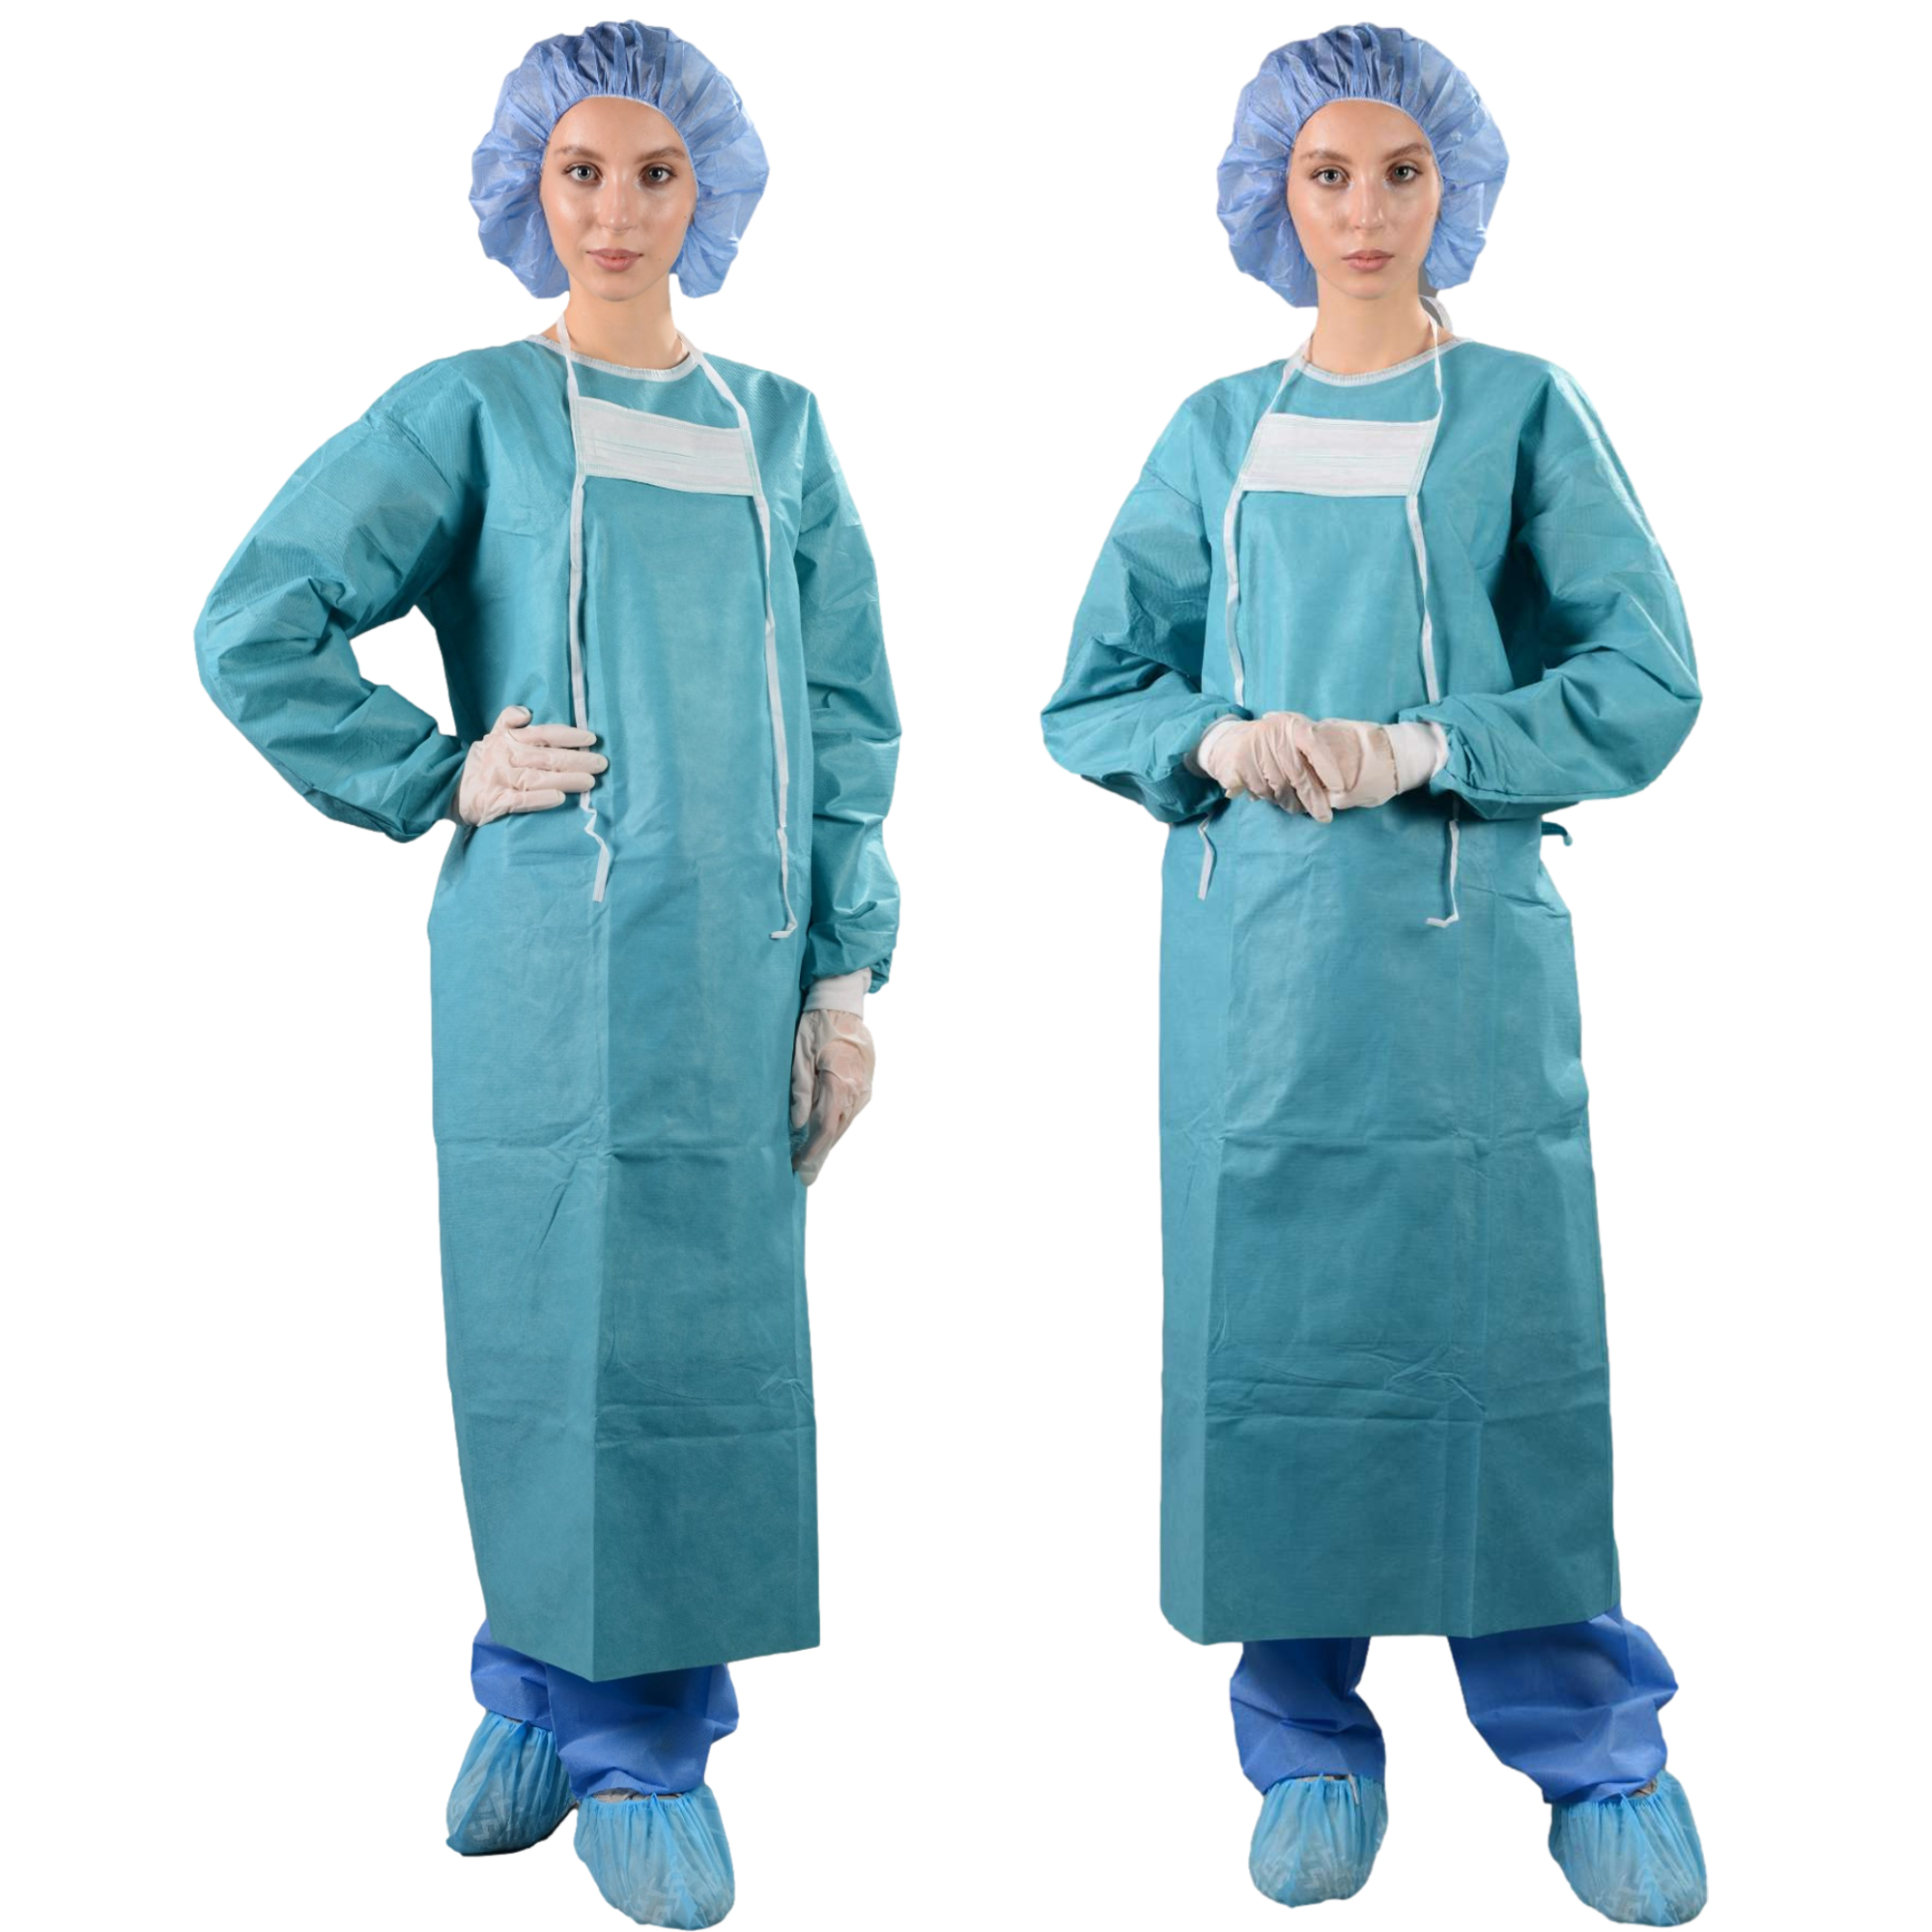 EN13795-1 European market SMMS standard surgical gowns